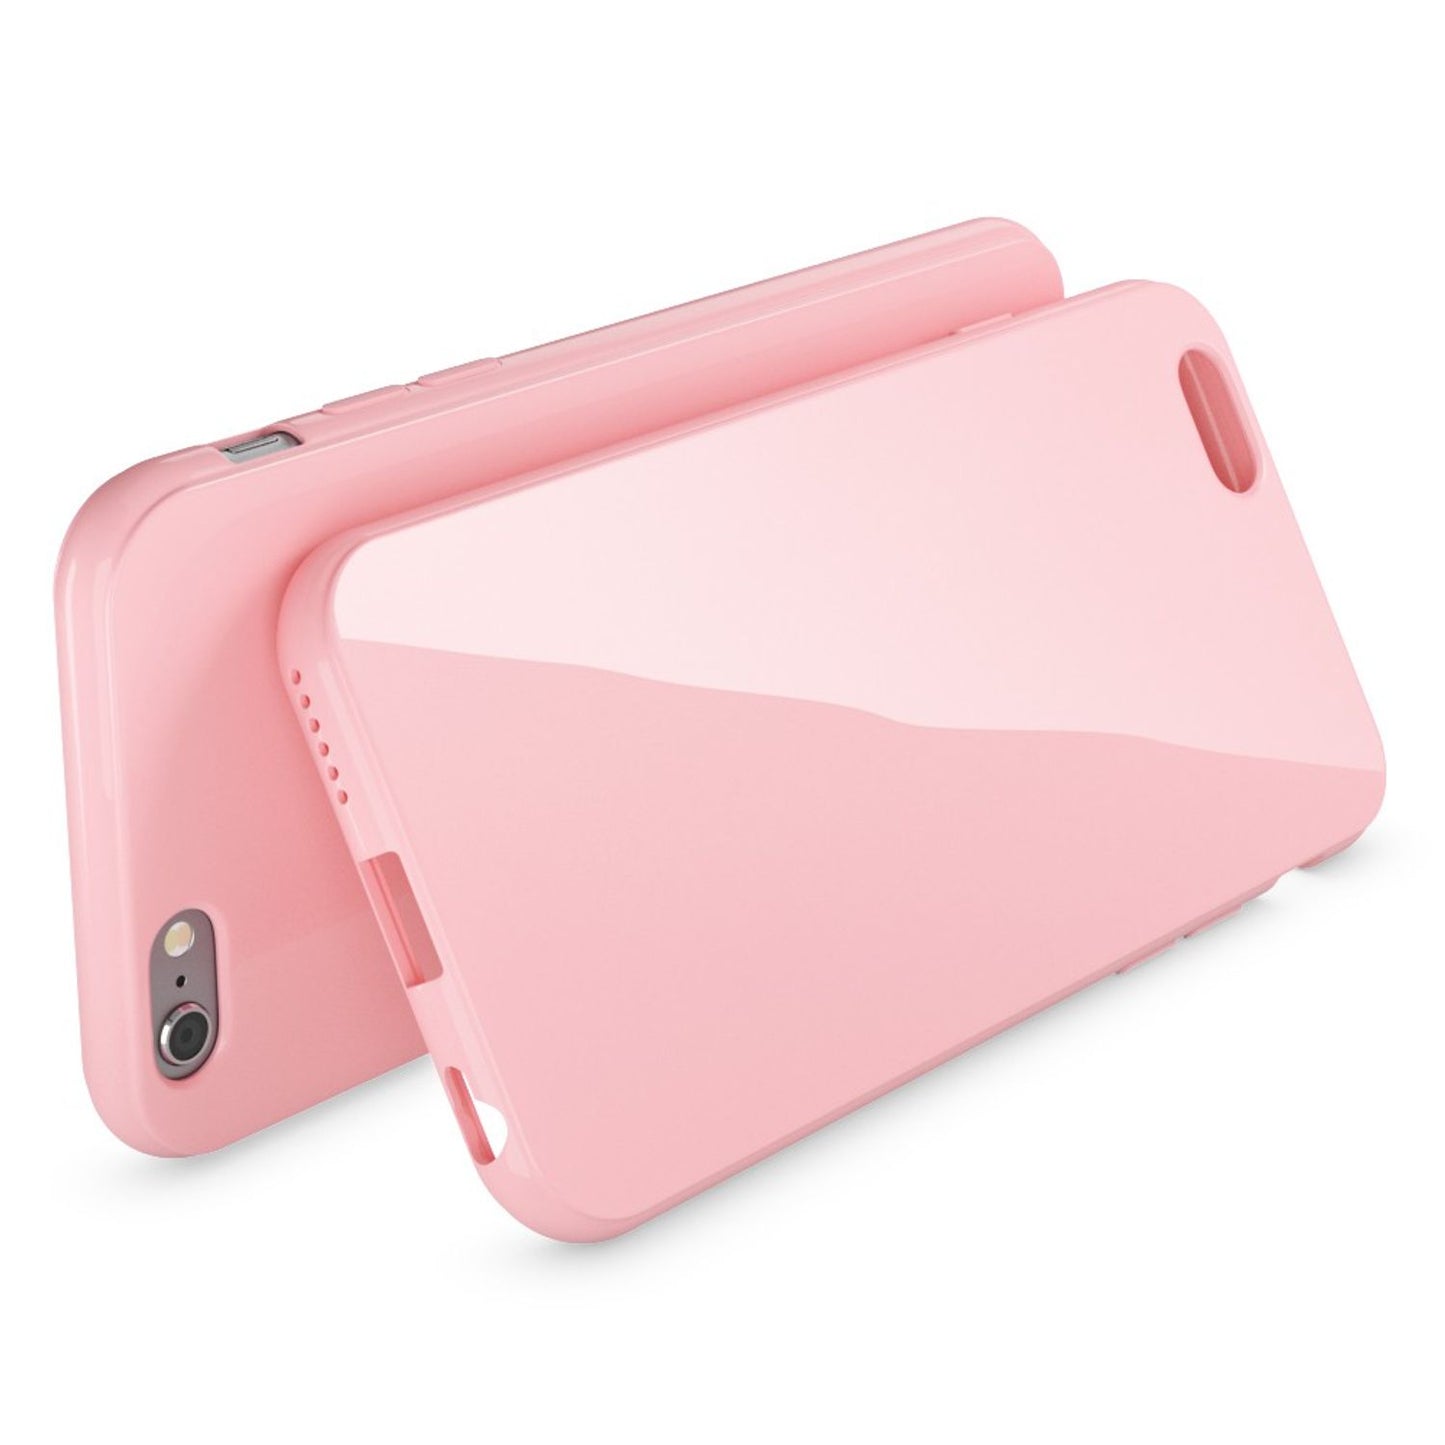 iPhone 6 Plus 6S Plus Hülle Handyhülle von NALIA, Ultra-Slim Silikon Jelly Case